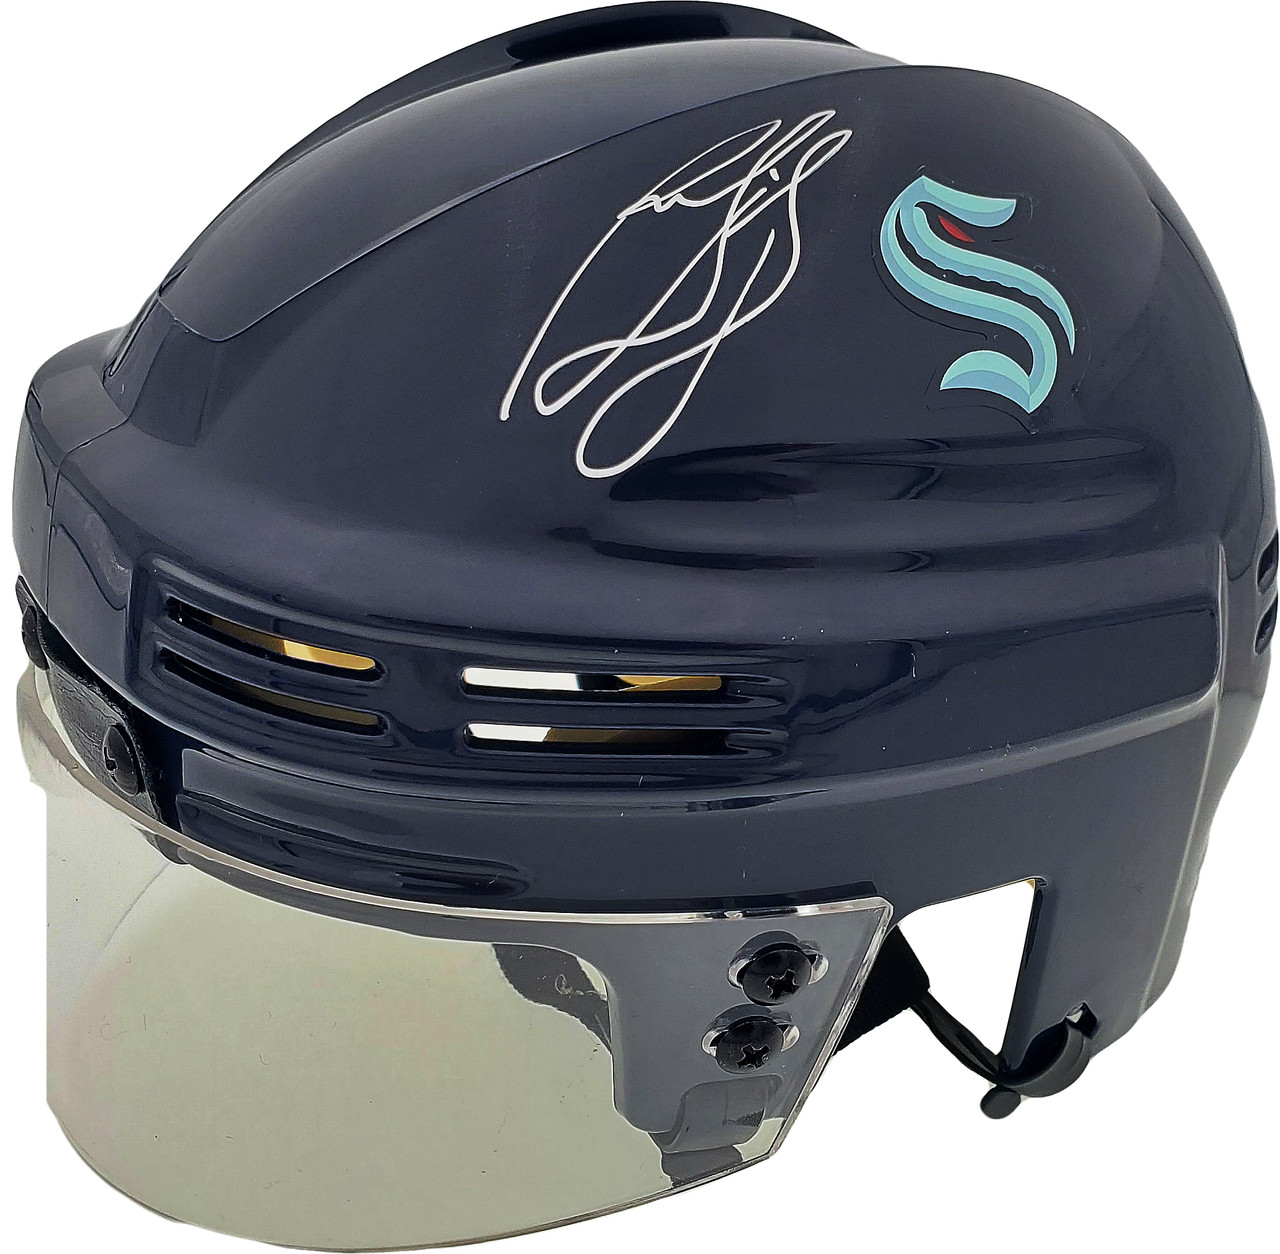 Philipp Grubauer Seattle Kraken Signed Replica Goalie Mask with Release  The Kraken Inscription